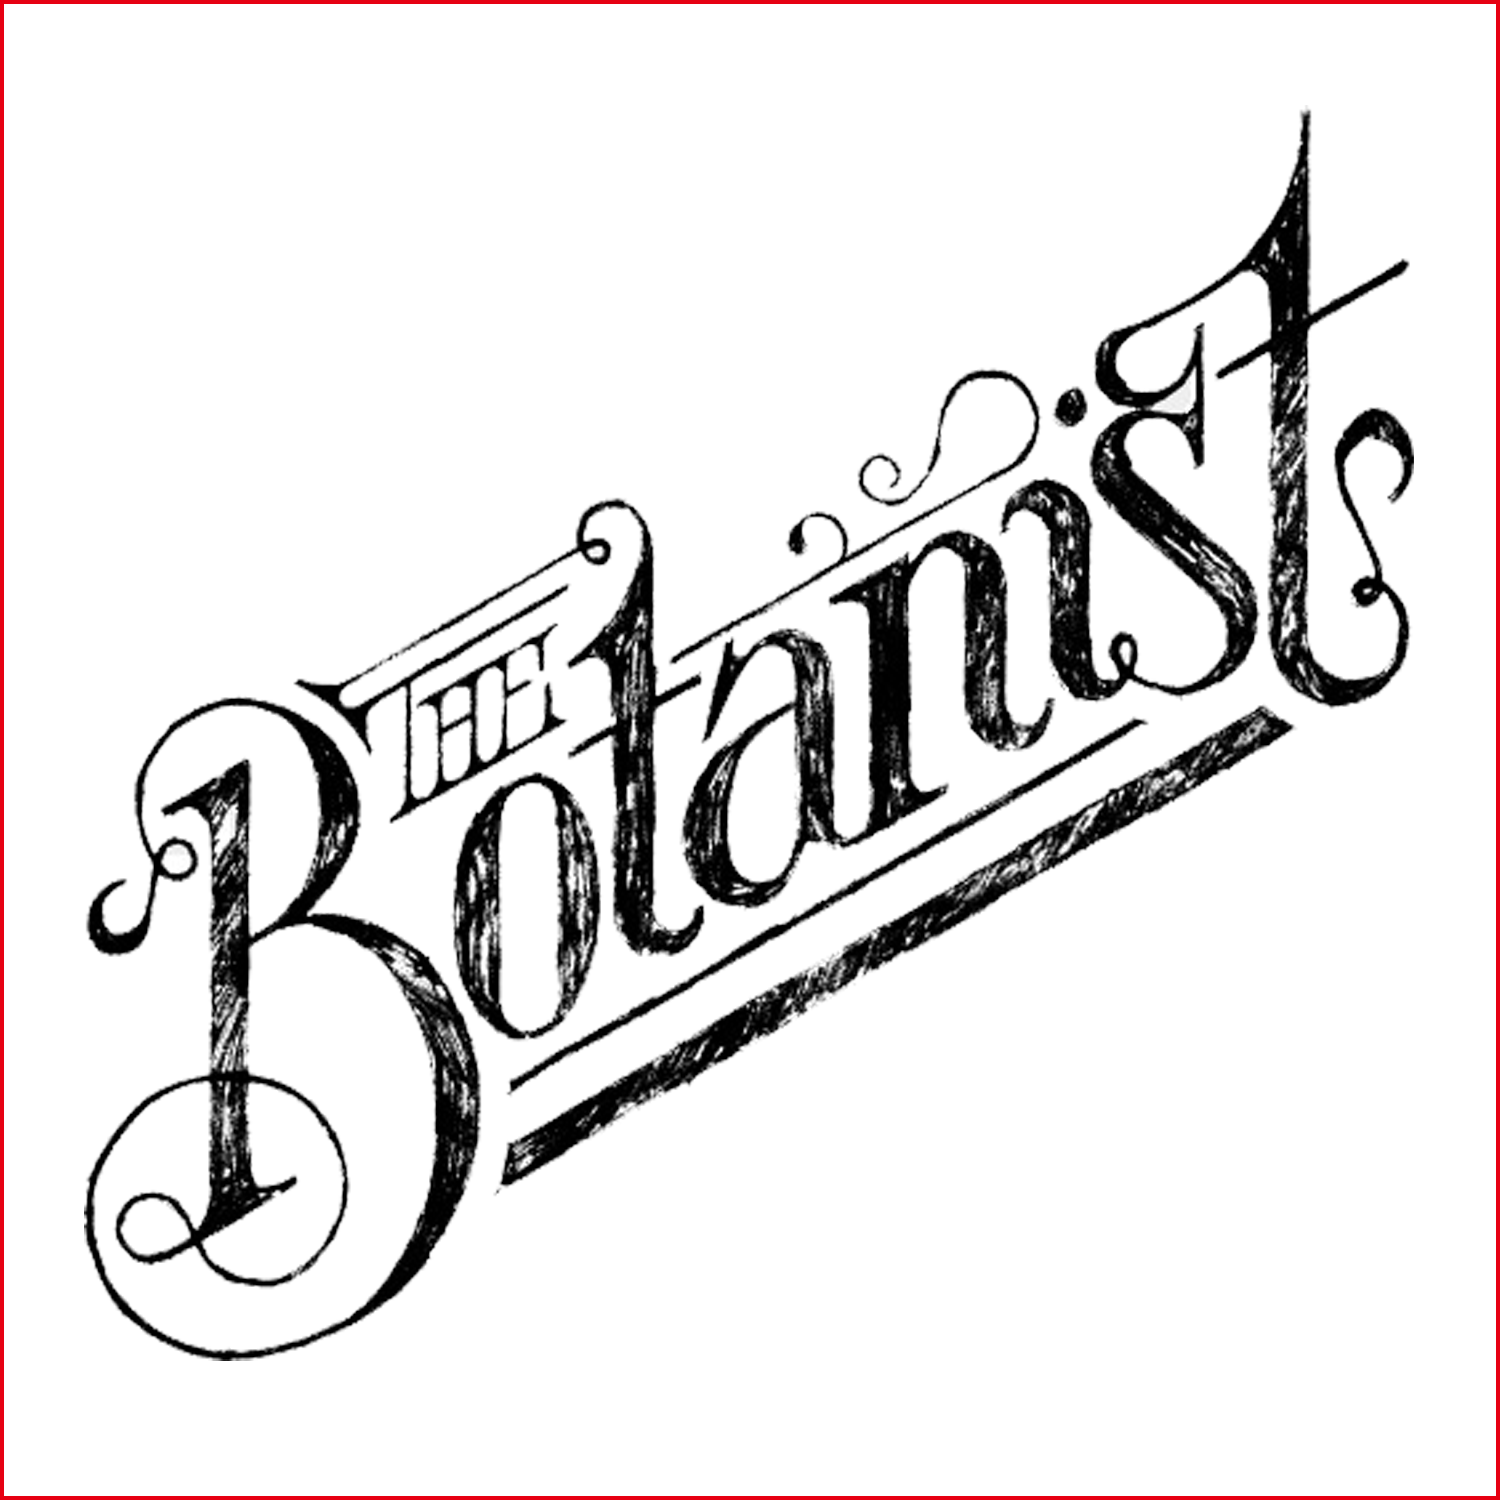 植物學家 The Botanist